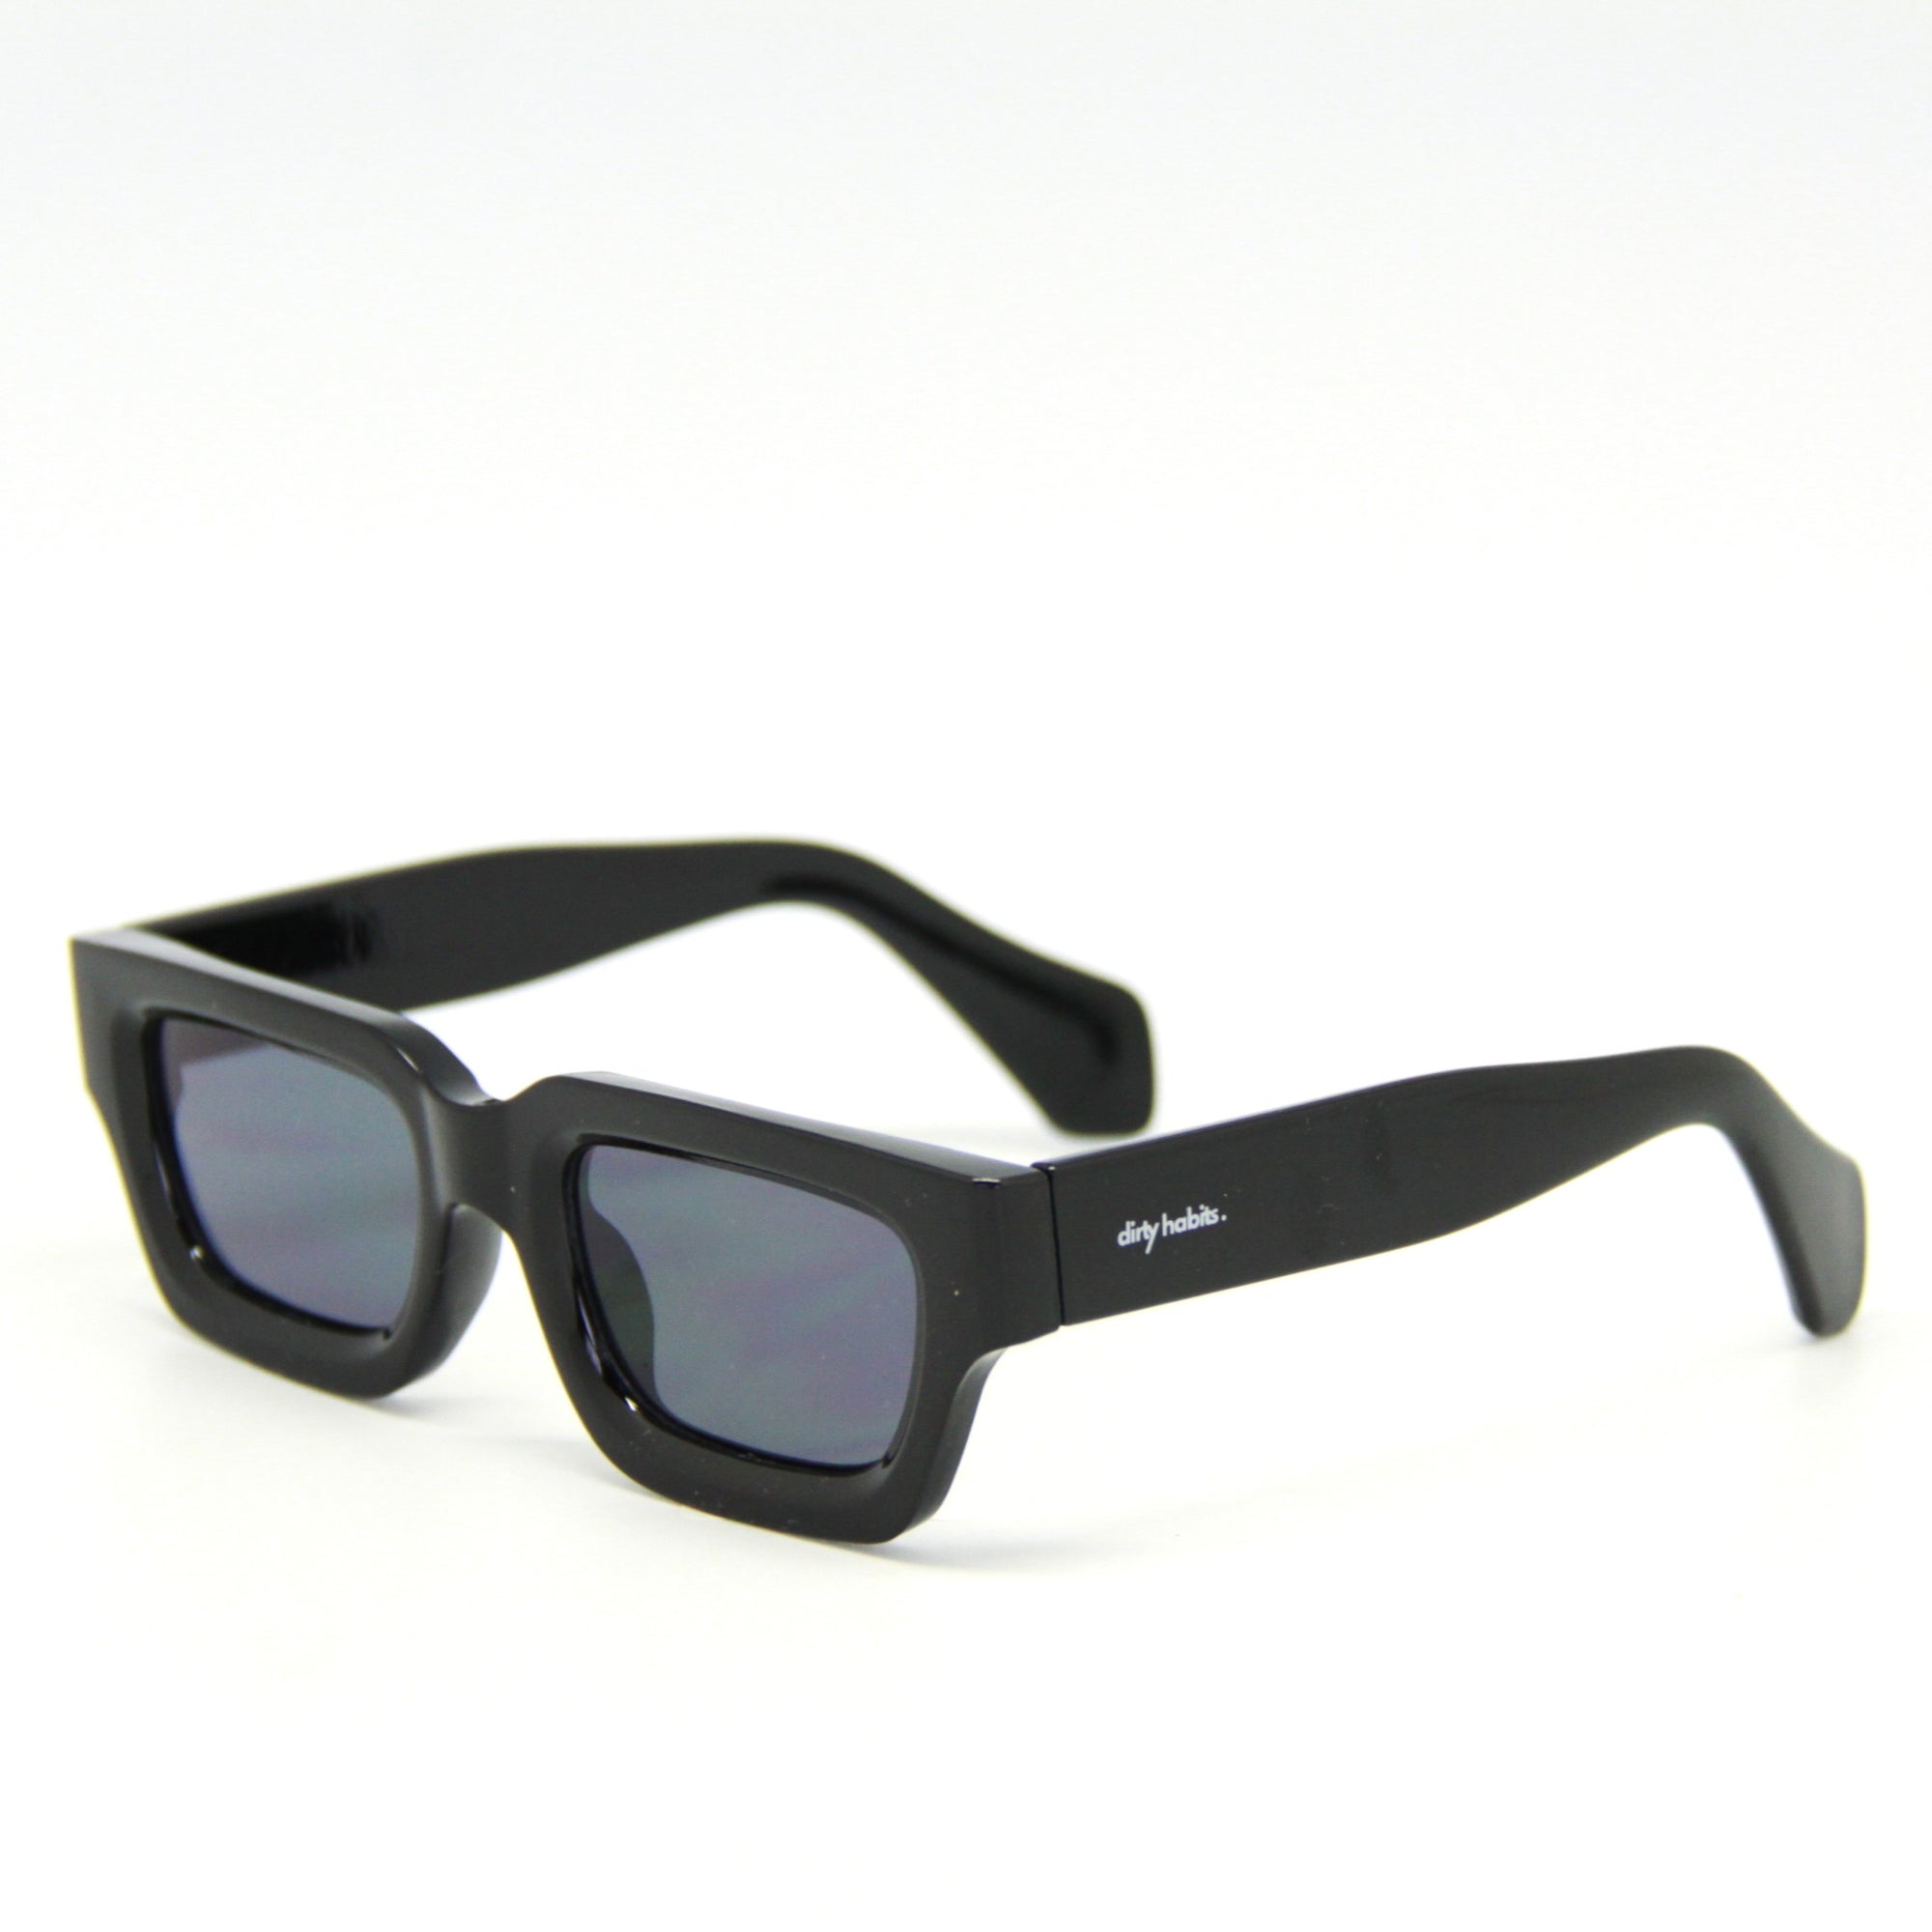 Dirty Habits Sunglasses / DHS134